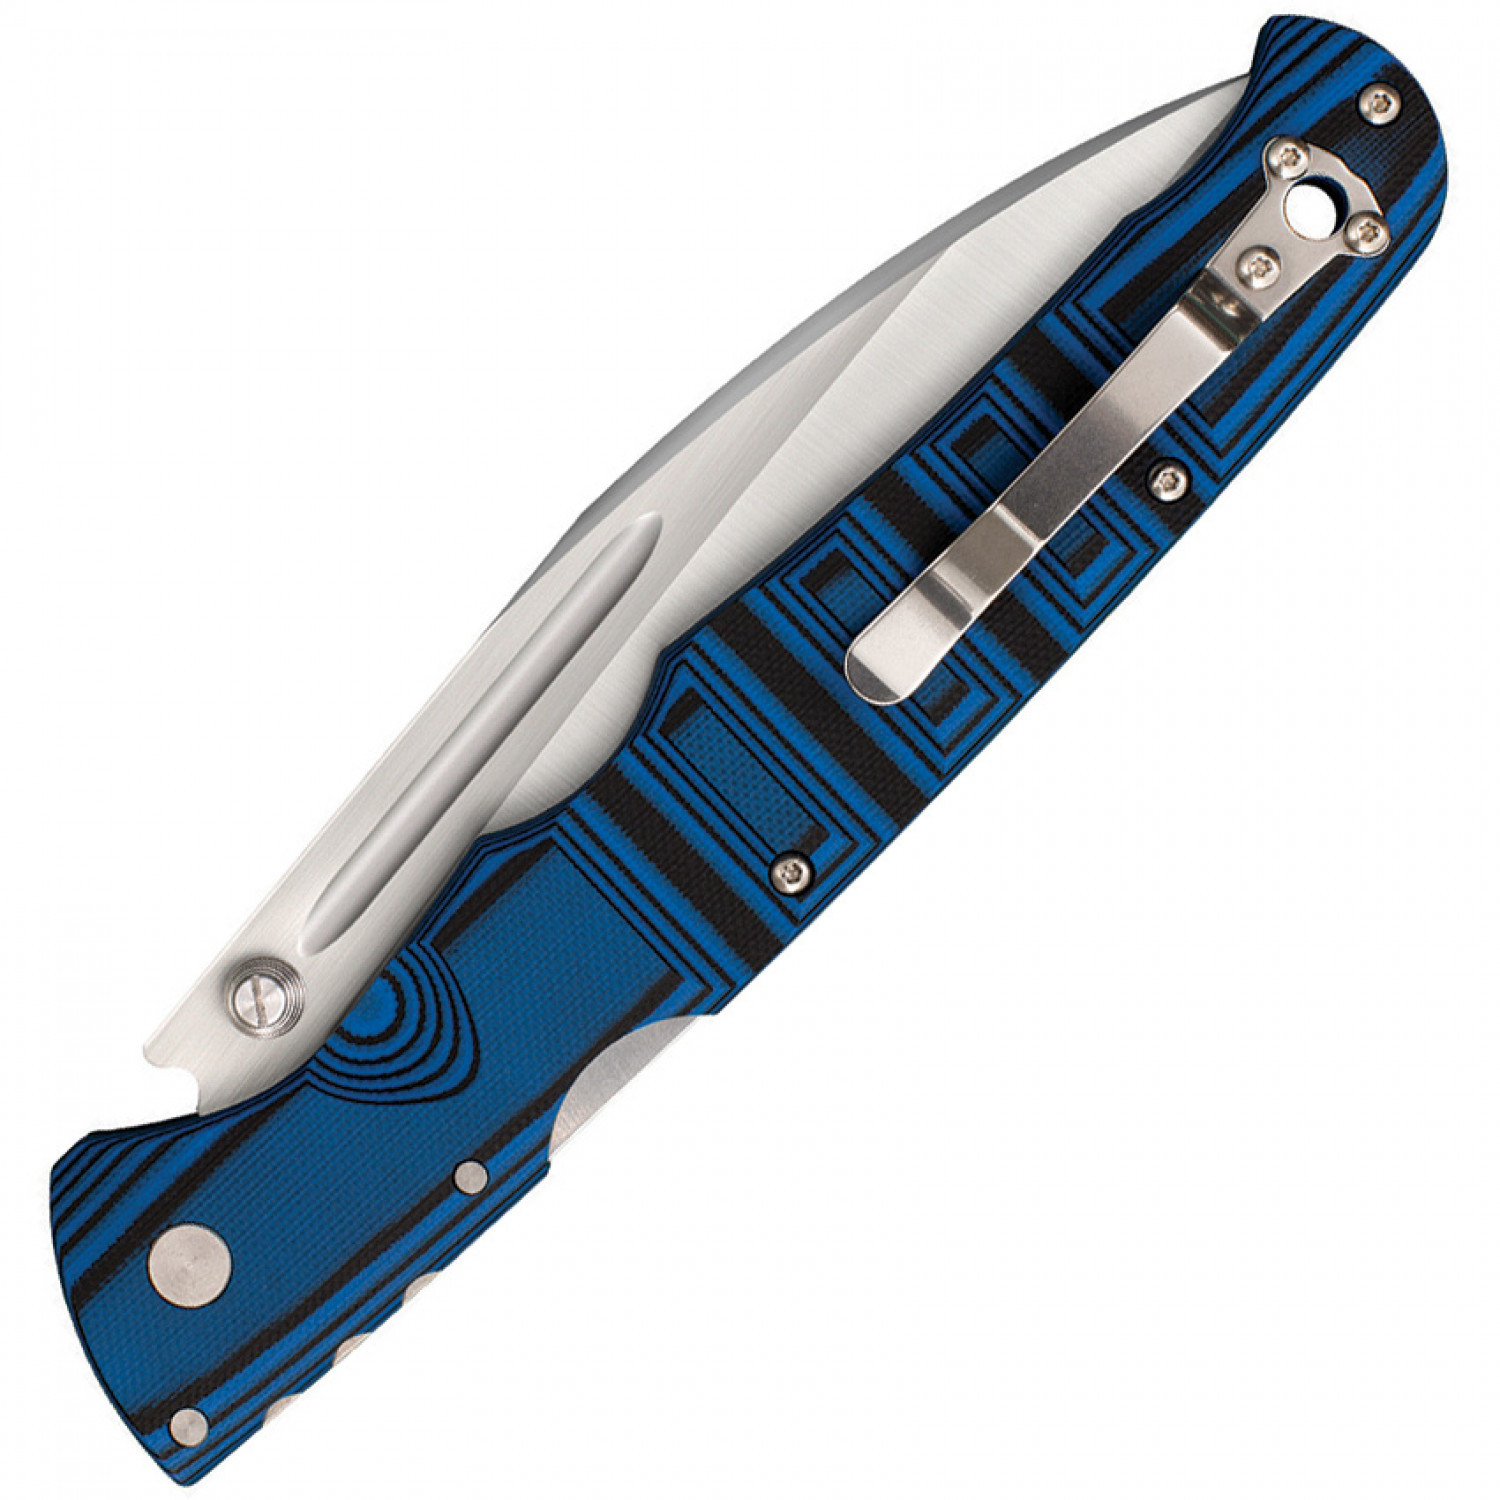 Складной нож Frenzy 2 (Blue/Black) - Cold Steel 62P2A, сталь CPM-S35VN, рукоять G10 - фото 3